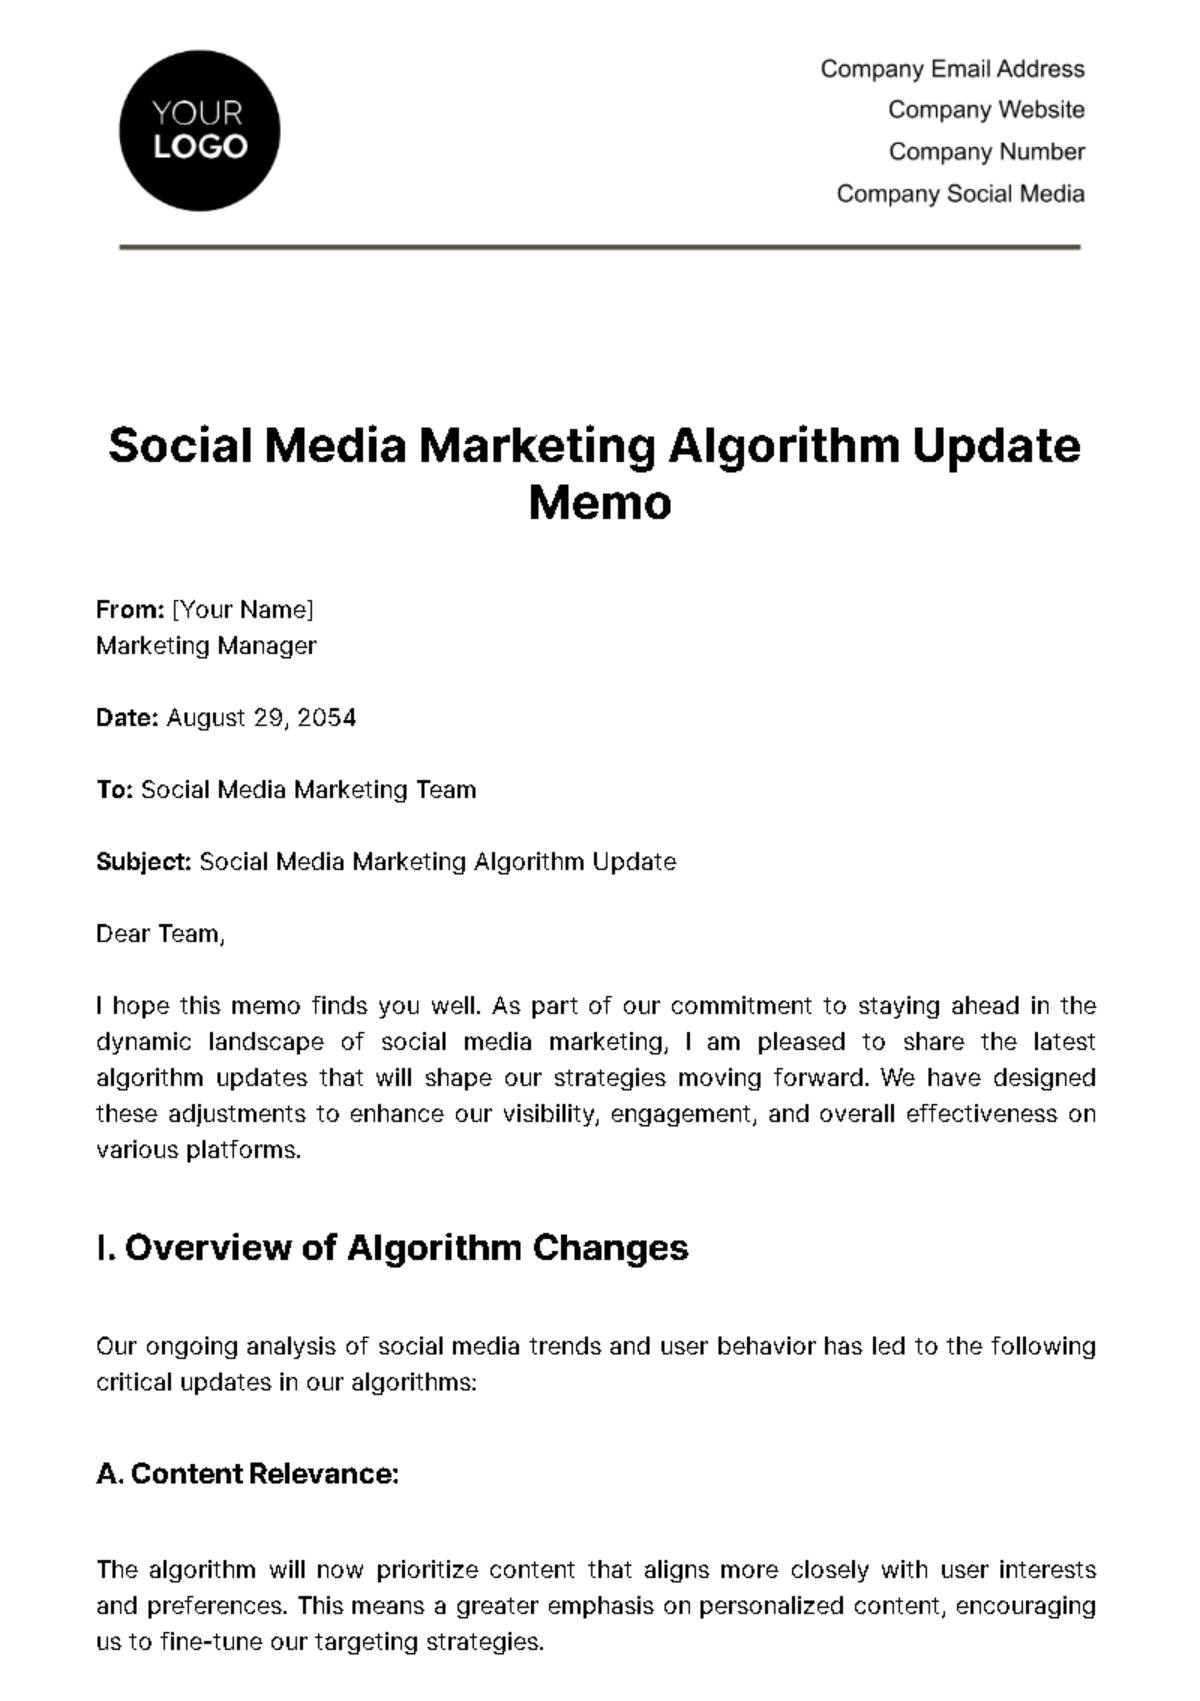 Social Media Marketing Algorithm Update Memo Template